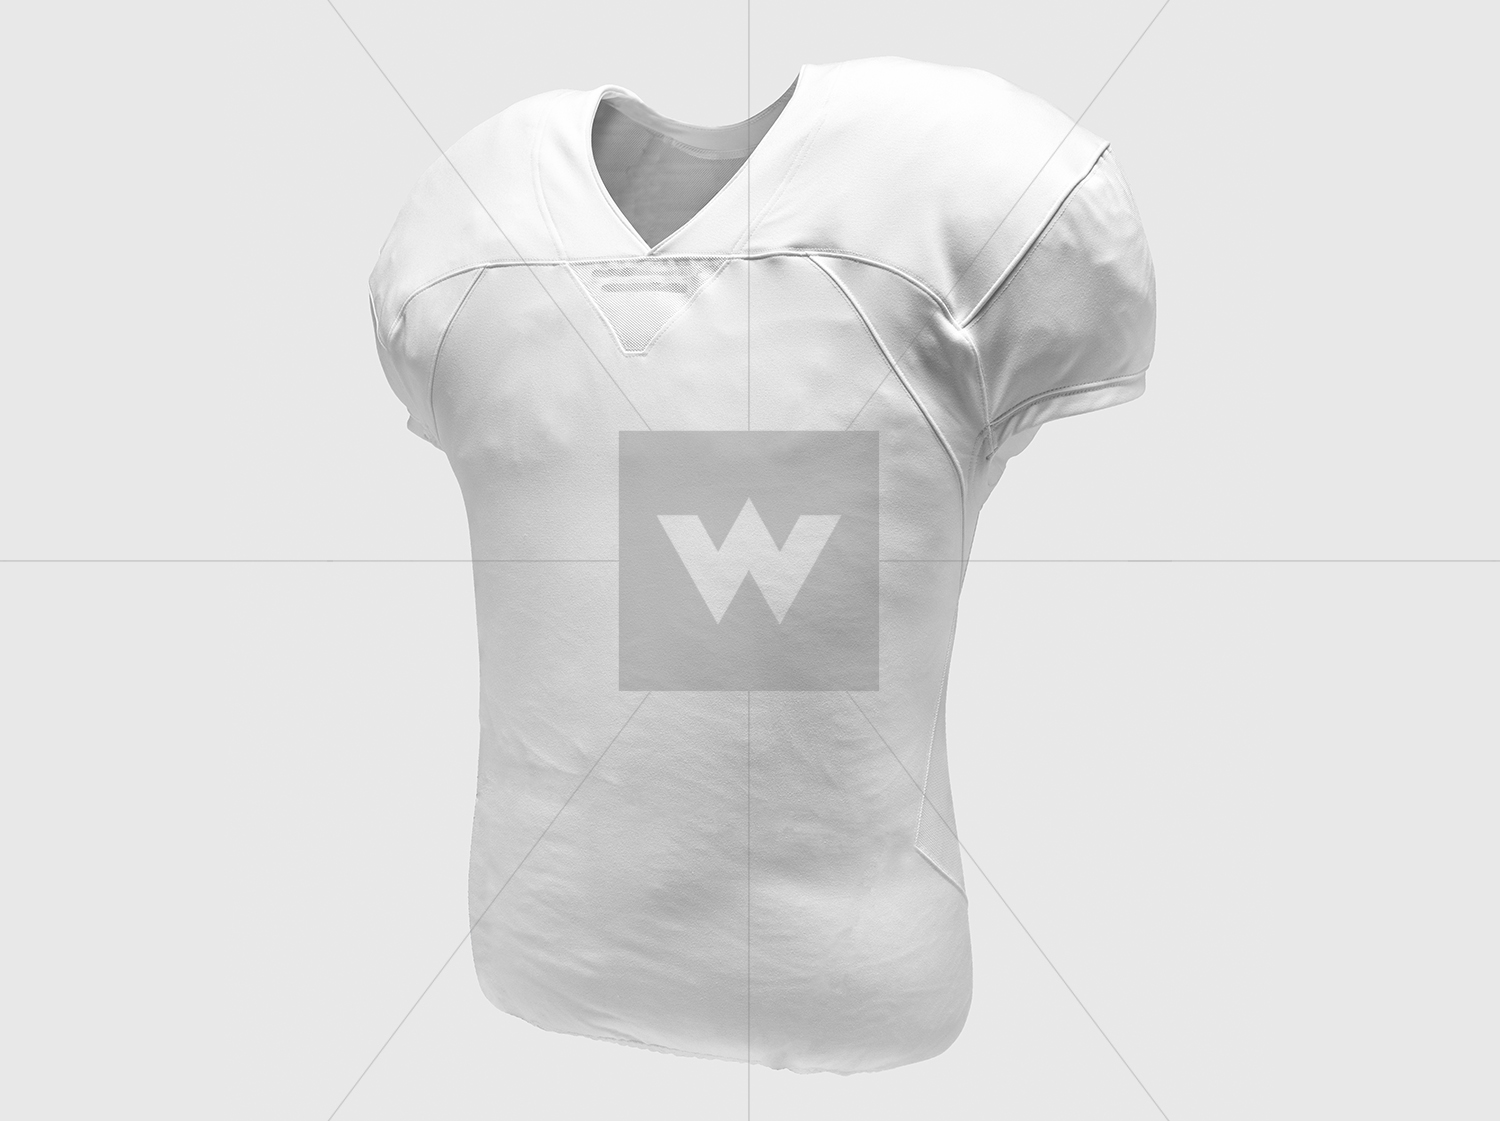 Design american football jersey, uniform 3d mockup by